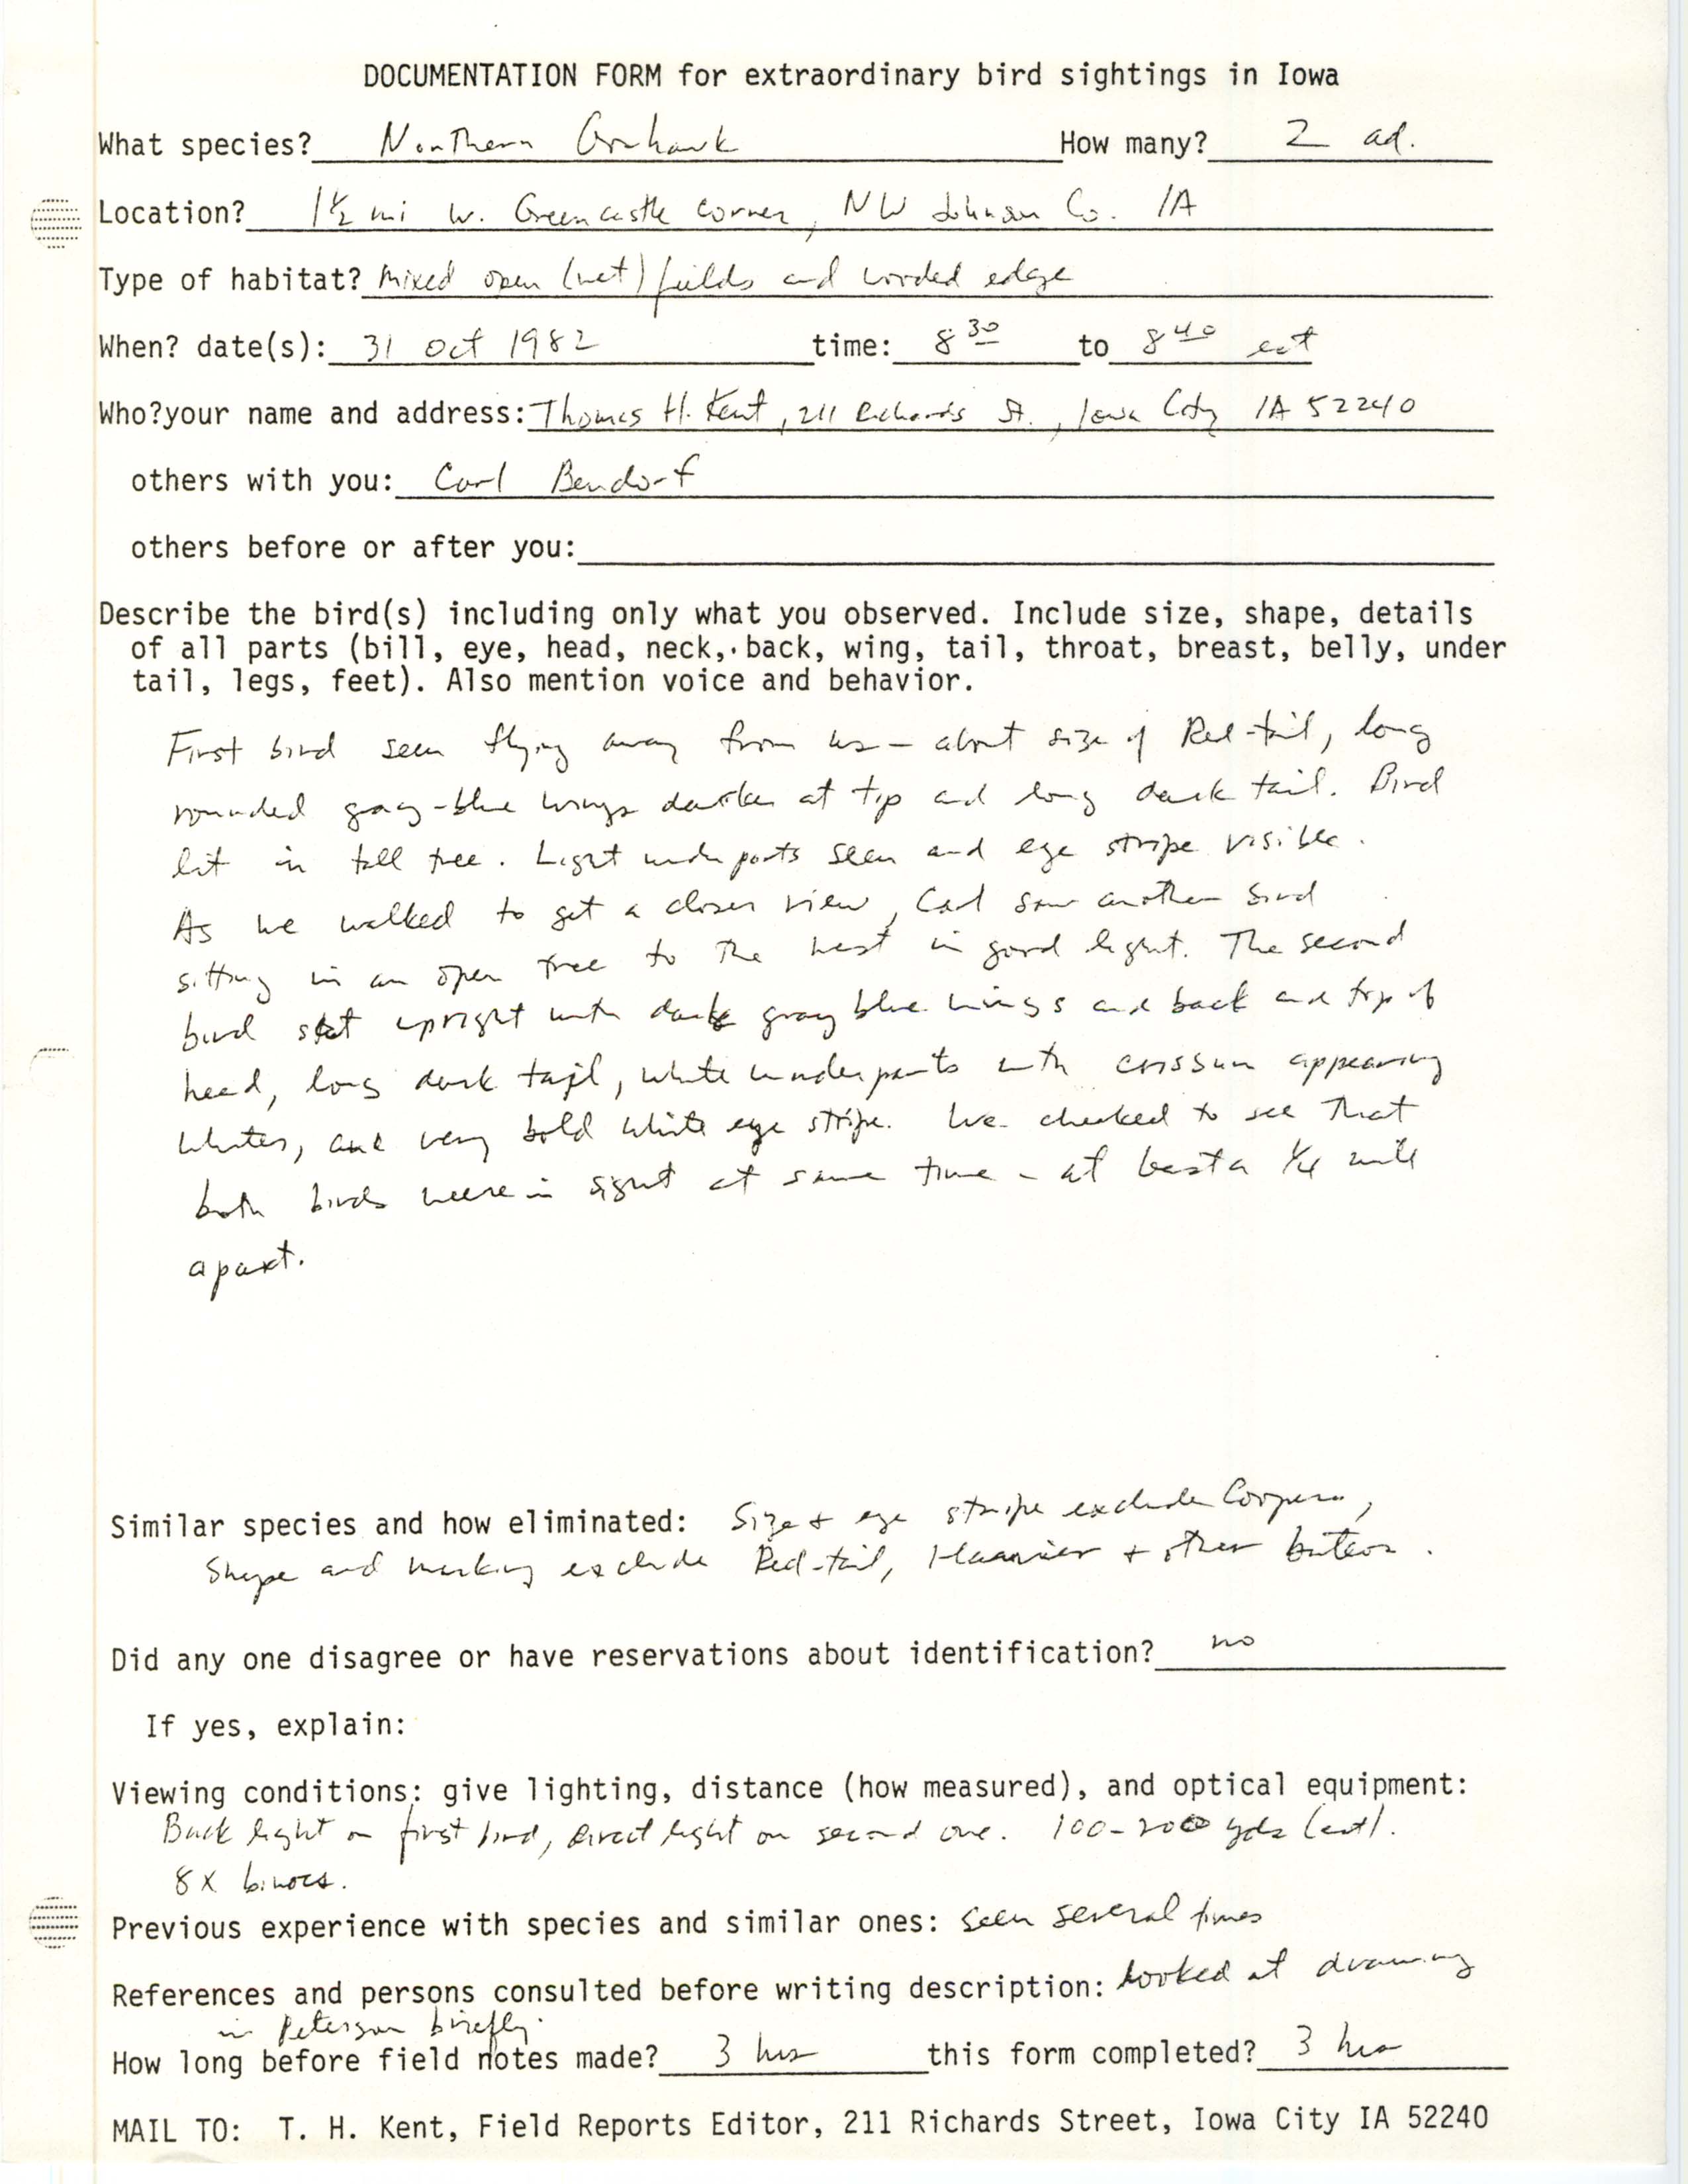 Rare bird documentation form for Northern Goshawk at Green Castle Corner in Johnson County, 1982